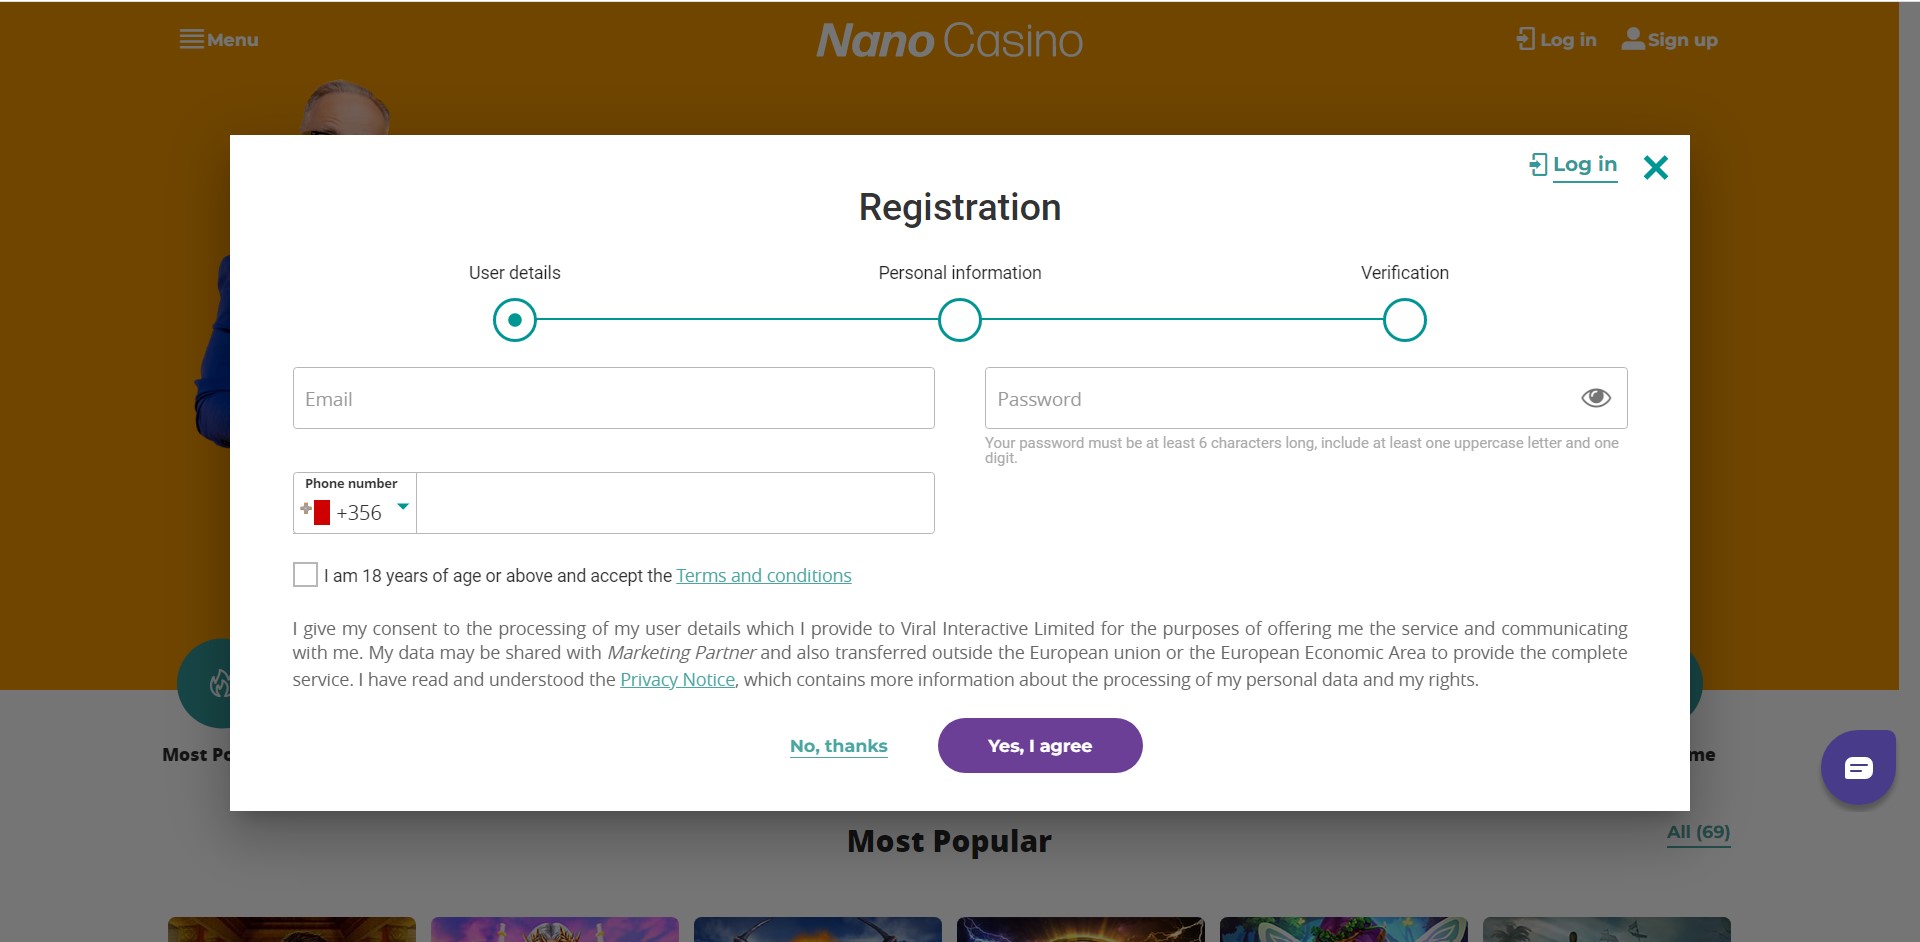 Nano casino first screen